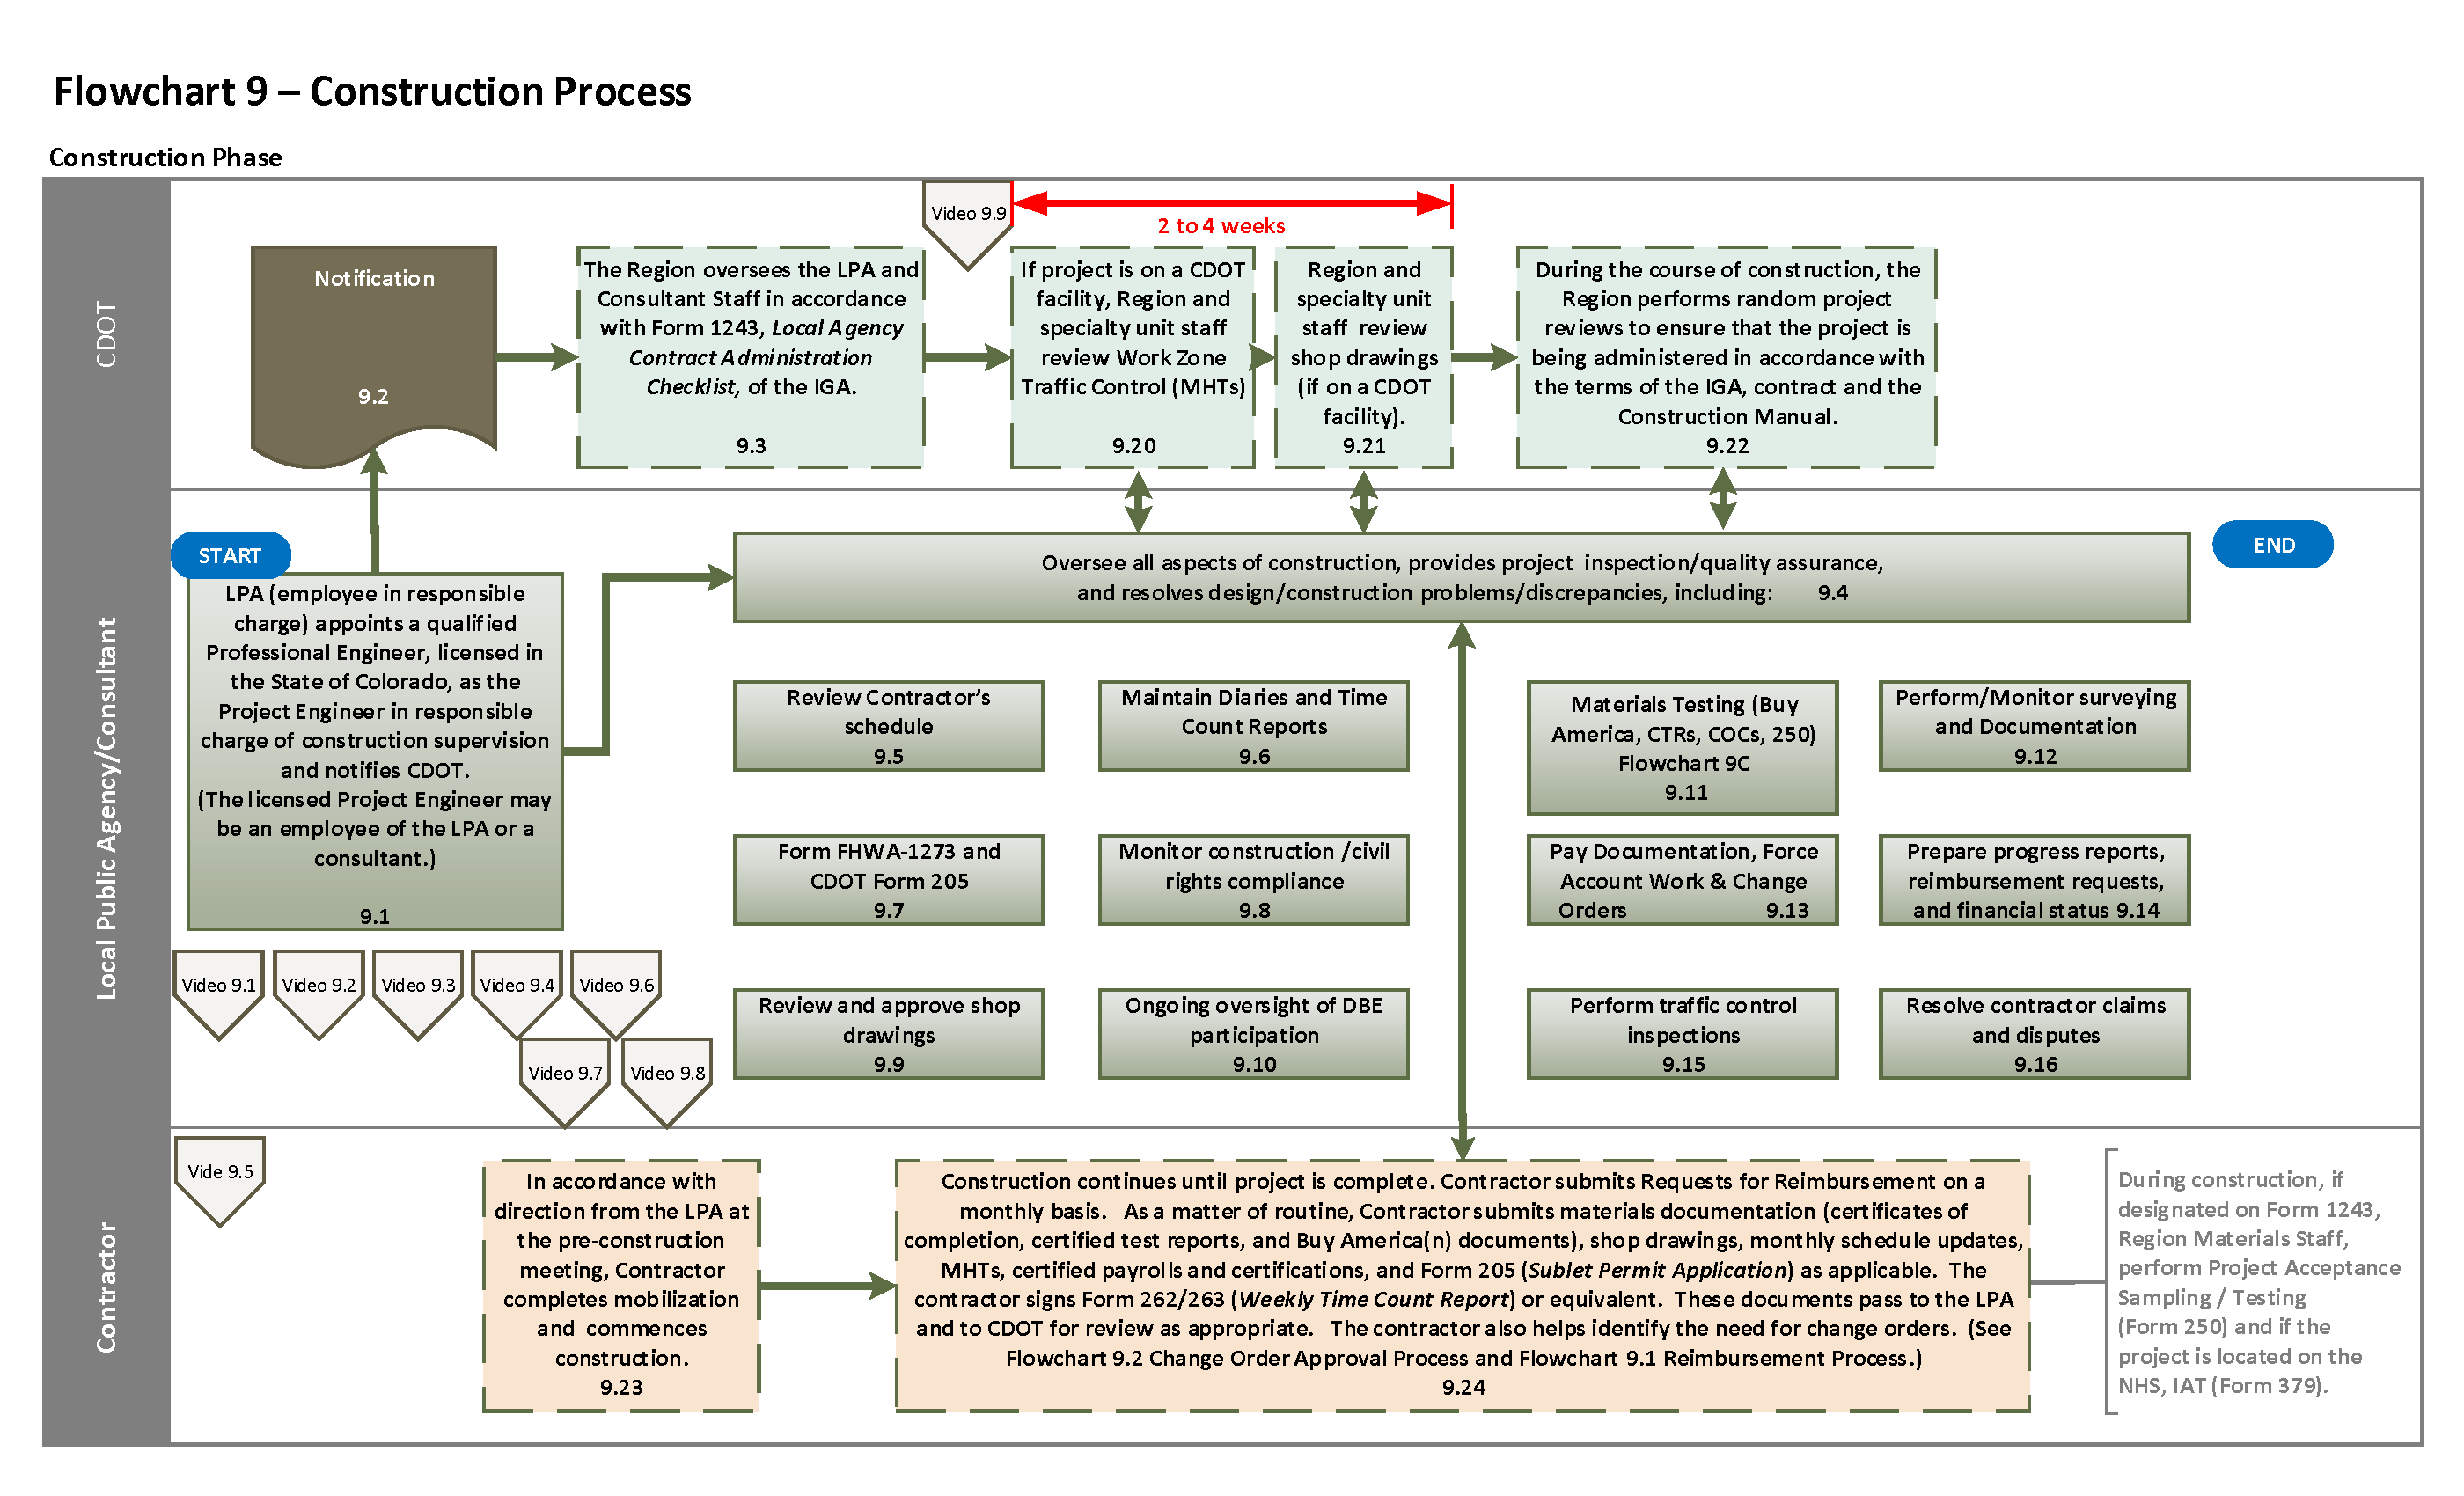 Work Order Process Flow Chart